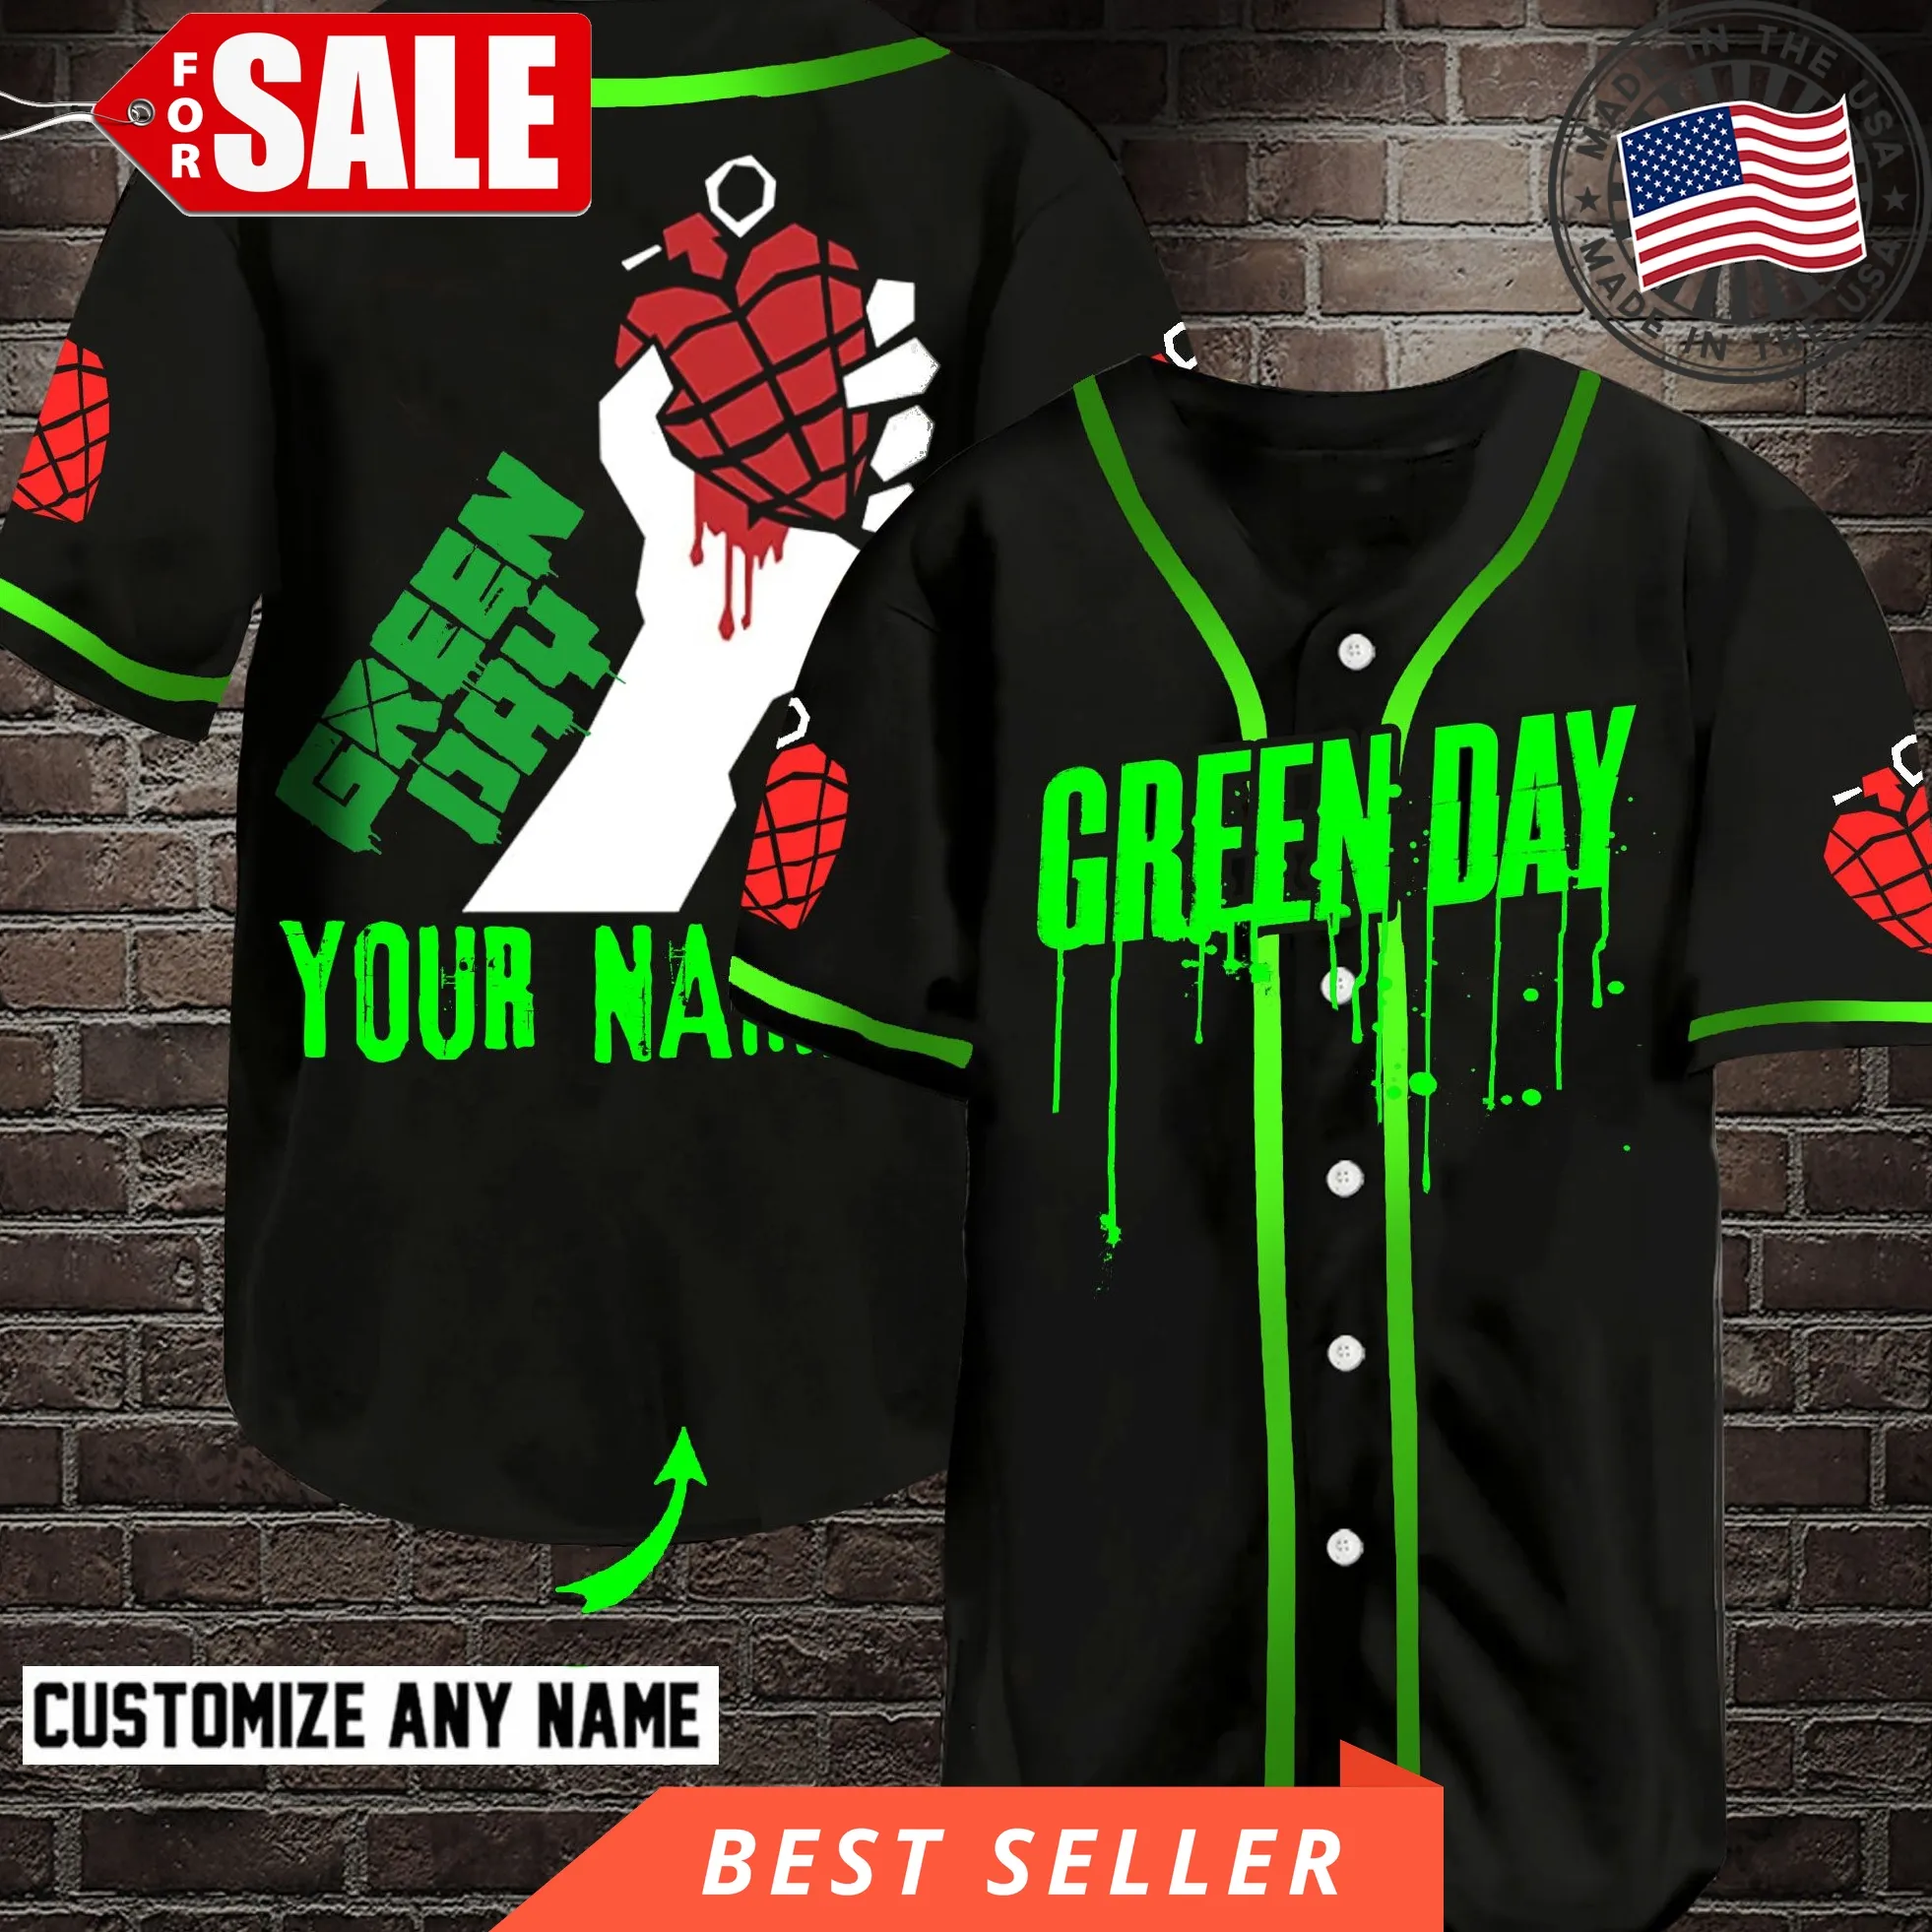 Green Day Customize Name Baseball Jersey Shirt